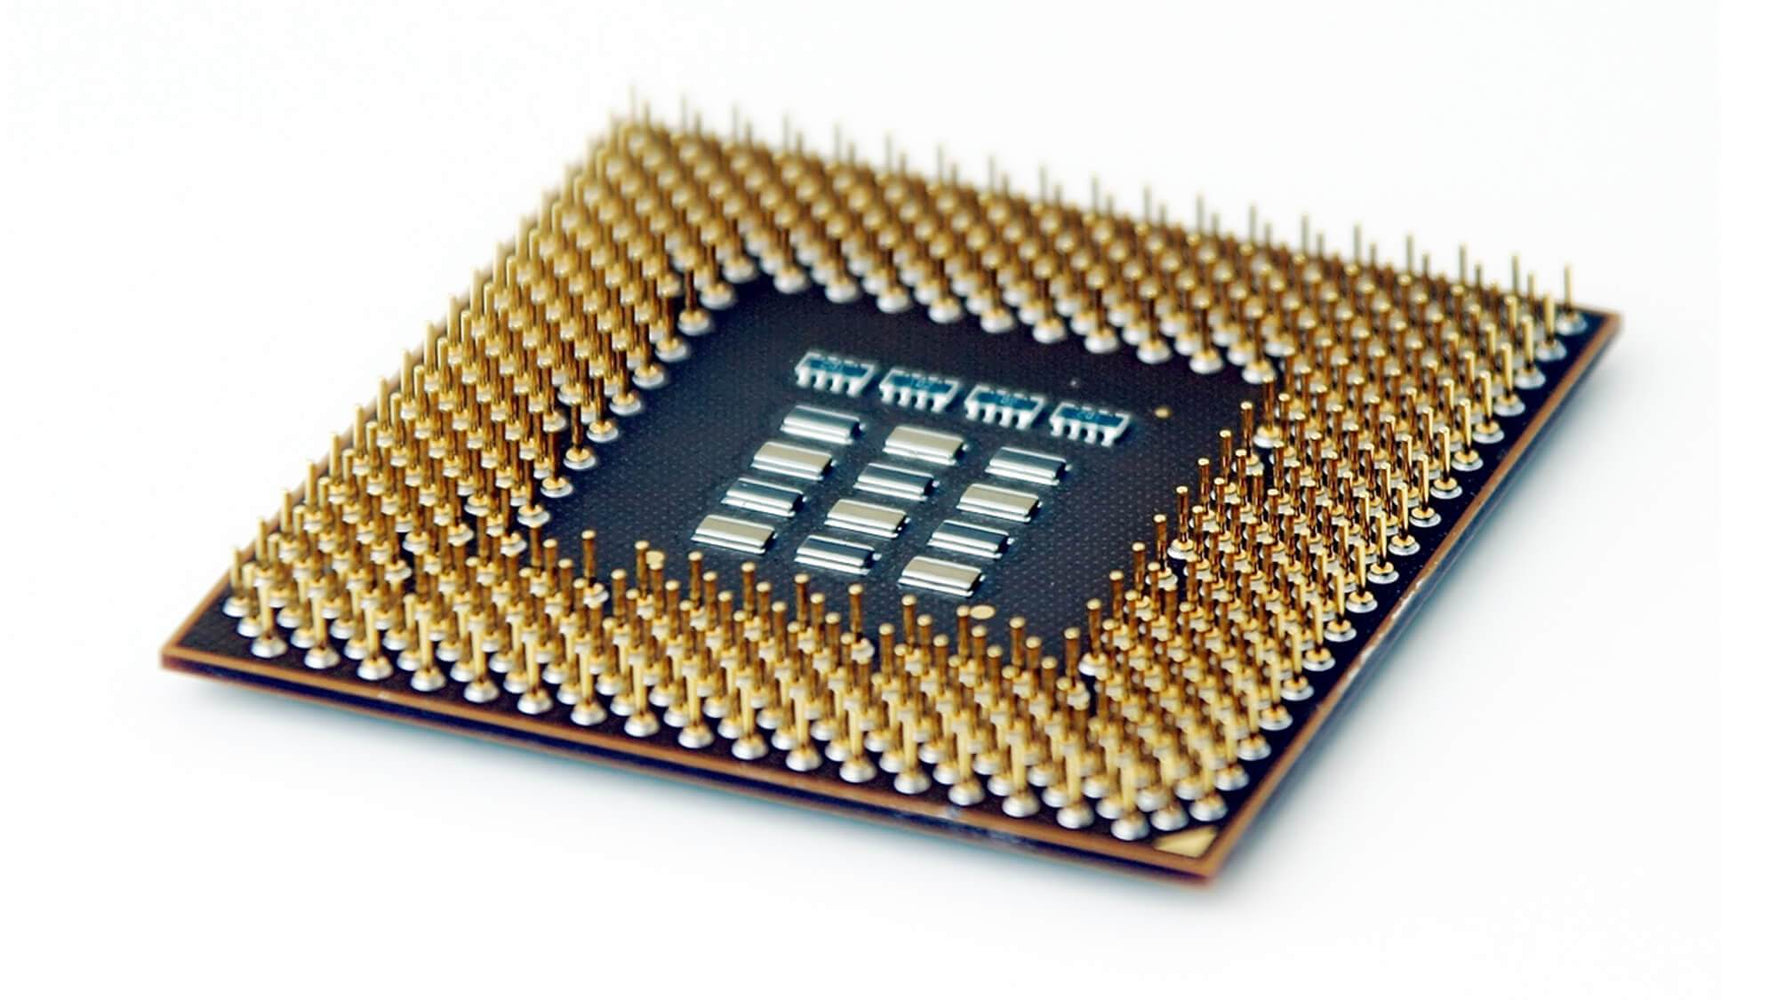 BX80623G460 - Intel Celeron G460 1.80GHz 5.00GT/s DMI 1.5MB L3 Cache Socket FCLGA1155 Desktop Processor